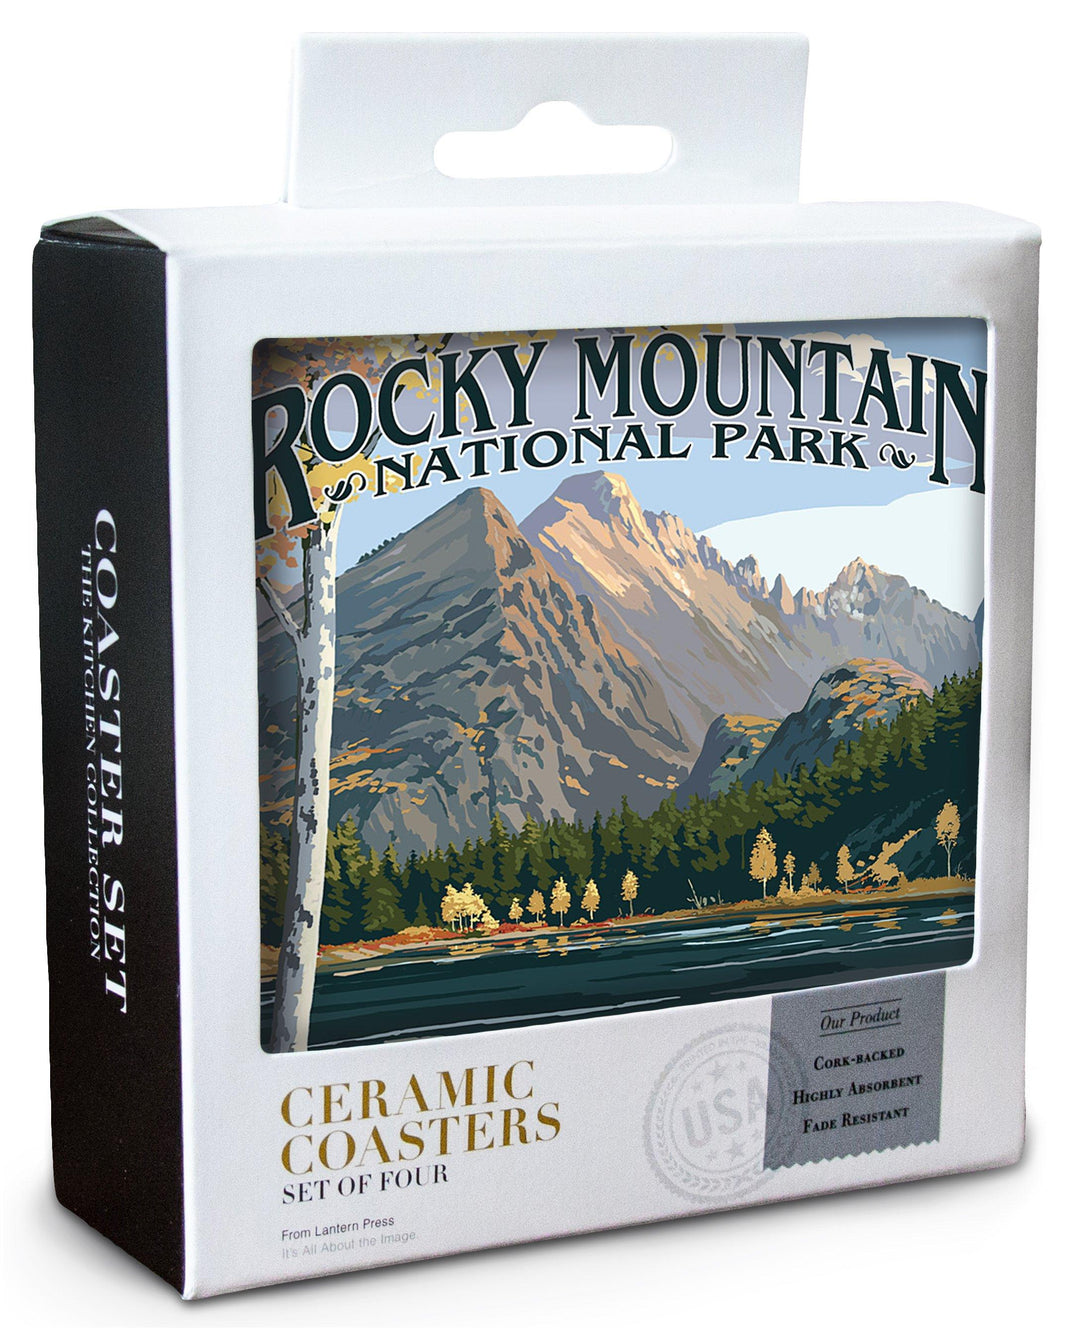 Rocky Mountain National Park, Colorado, Longs Peak & Bear Lake Fall, Lantern Press Artwork, Coaster Set Coasters Lantern Press 